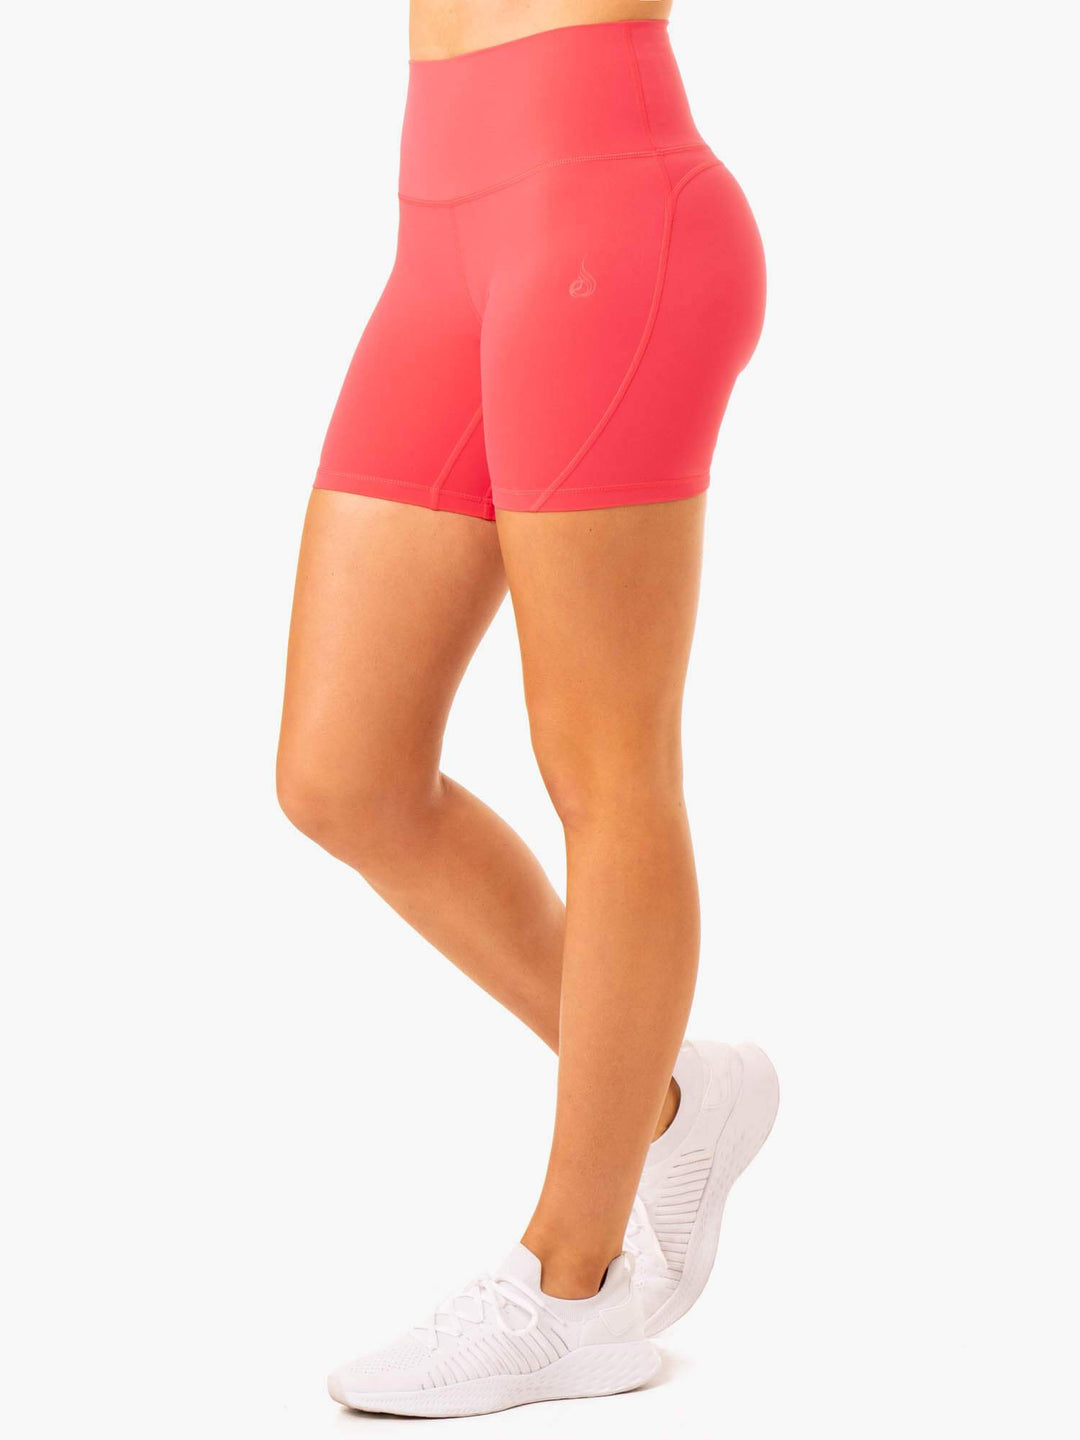 NKD Align Shorts - Watermelon Clothing Ryderwear 